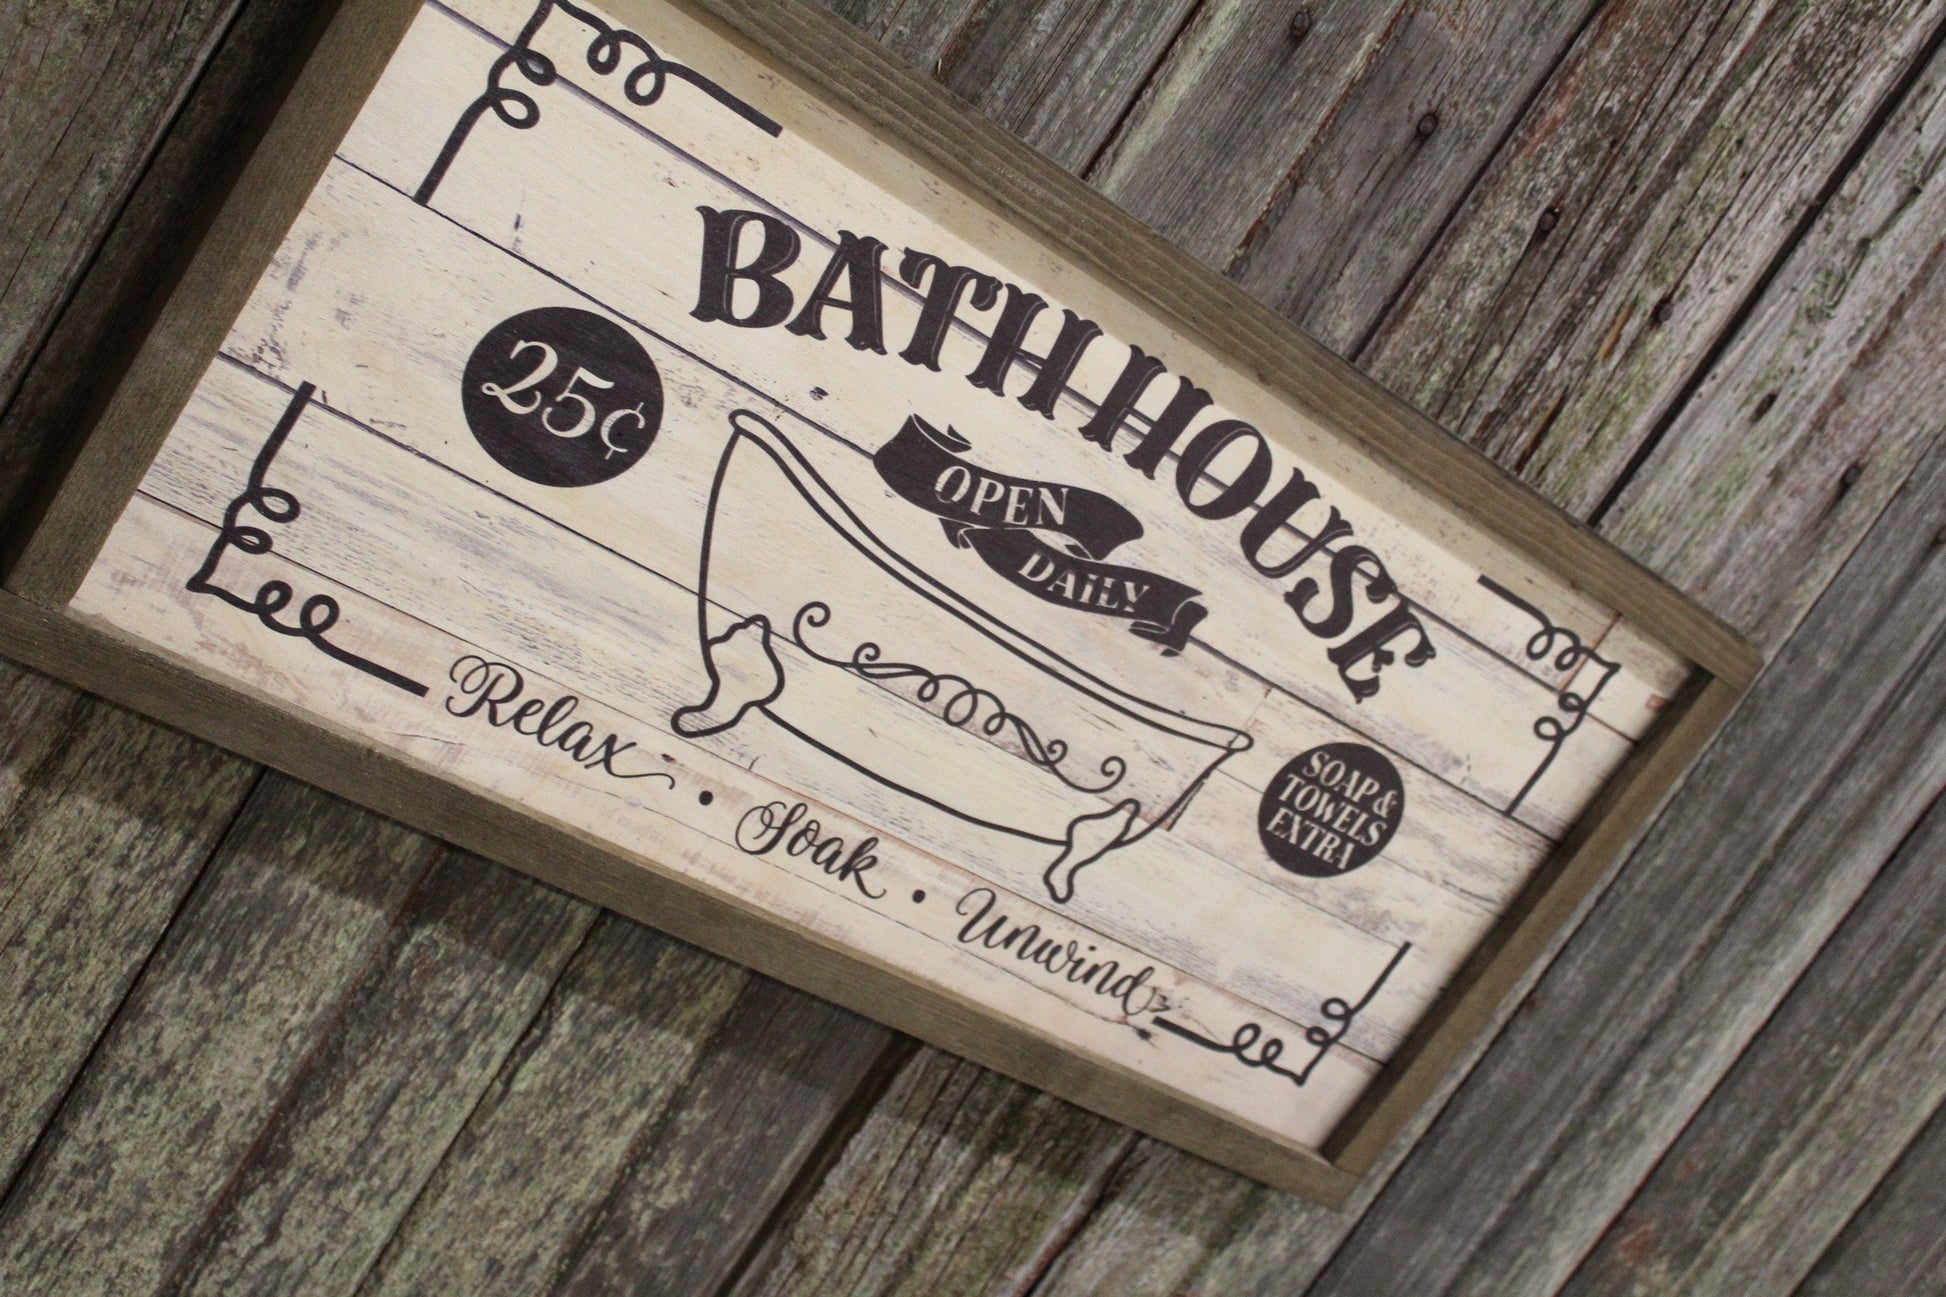 Farmhouse Bath House Bathhouse Tub Wood Sign Claw Foot 25 Cents Shiplap Relax Soak Towels Extra Unwind Framed Wall Art Primitive Rustic